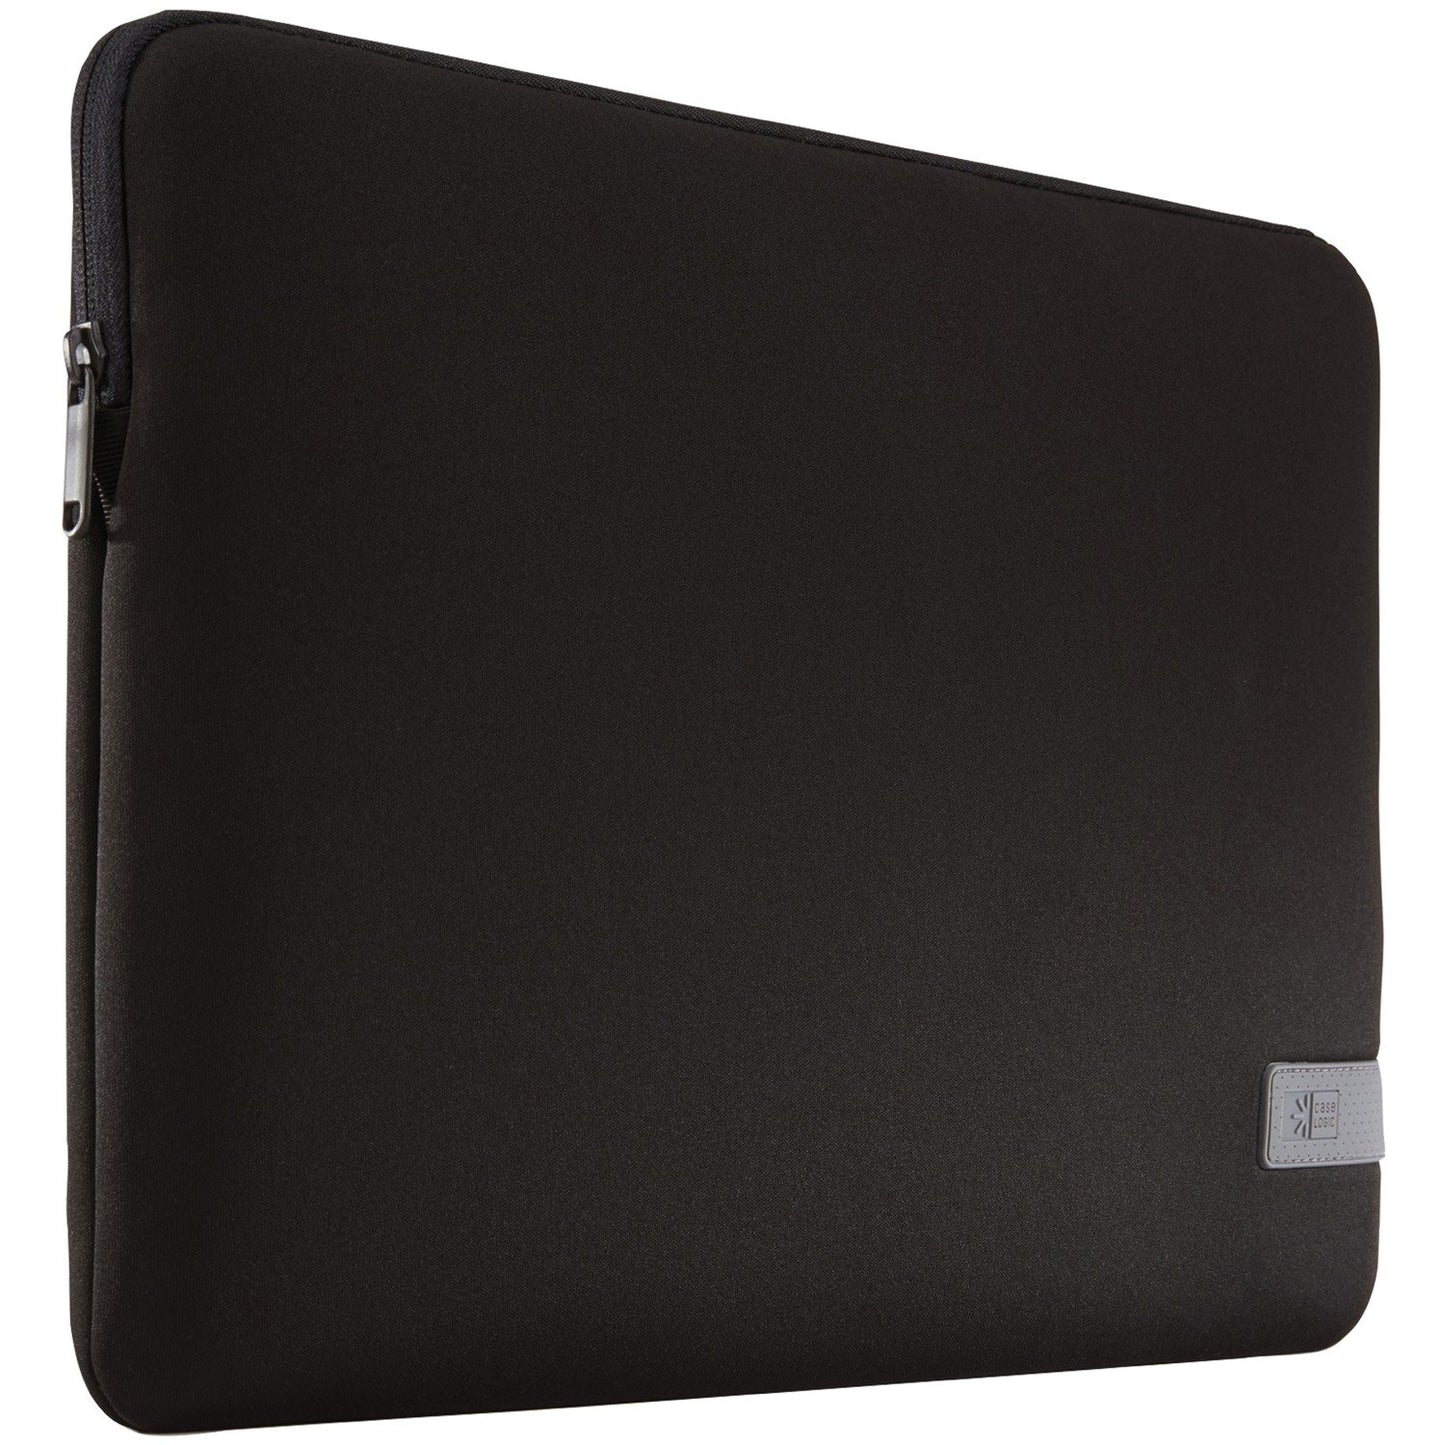 Case Logic 3203963 15.6-Inch Reflect Laptop Sleeve (Black)